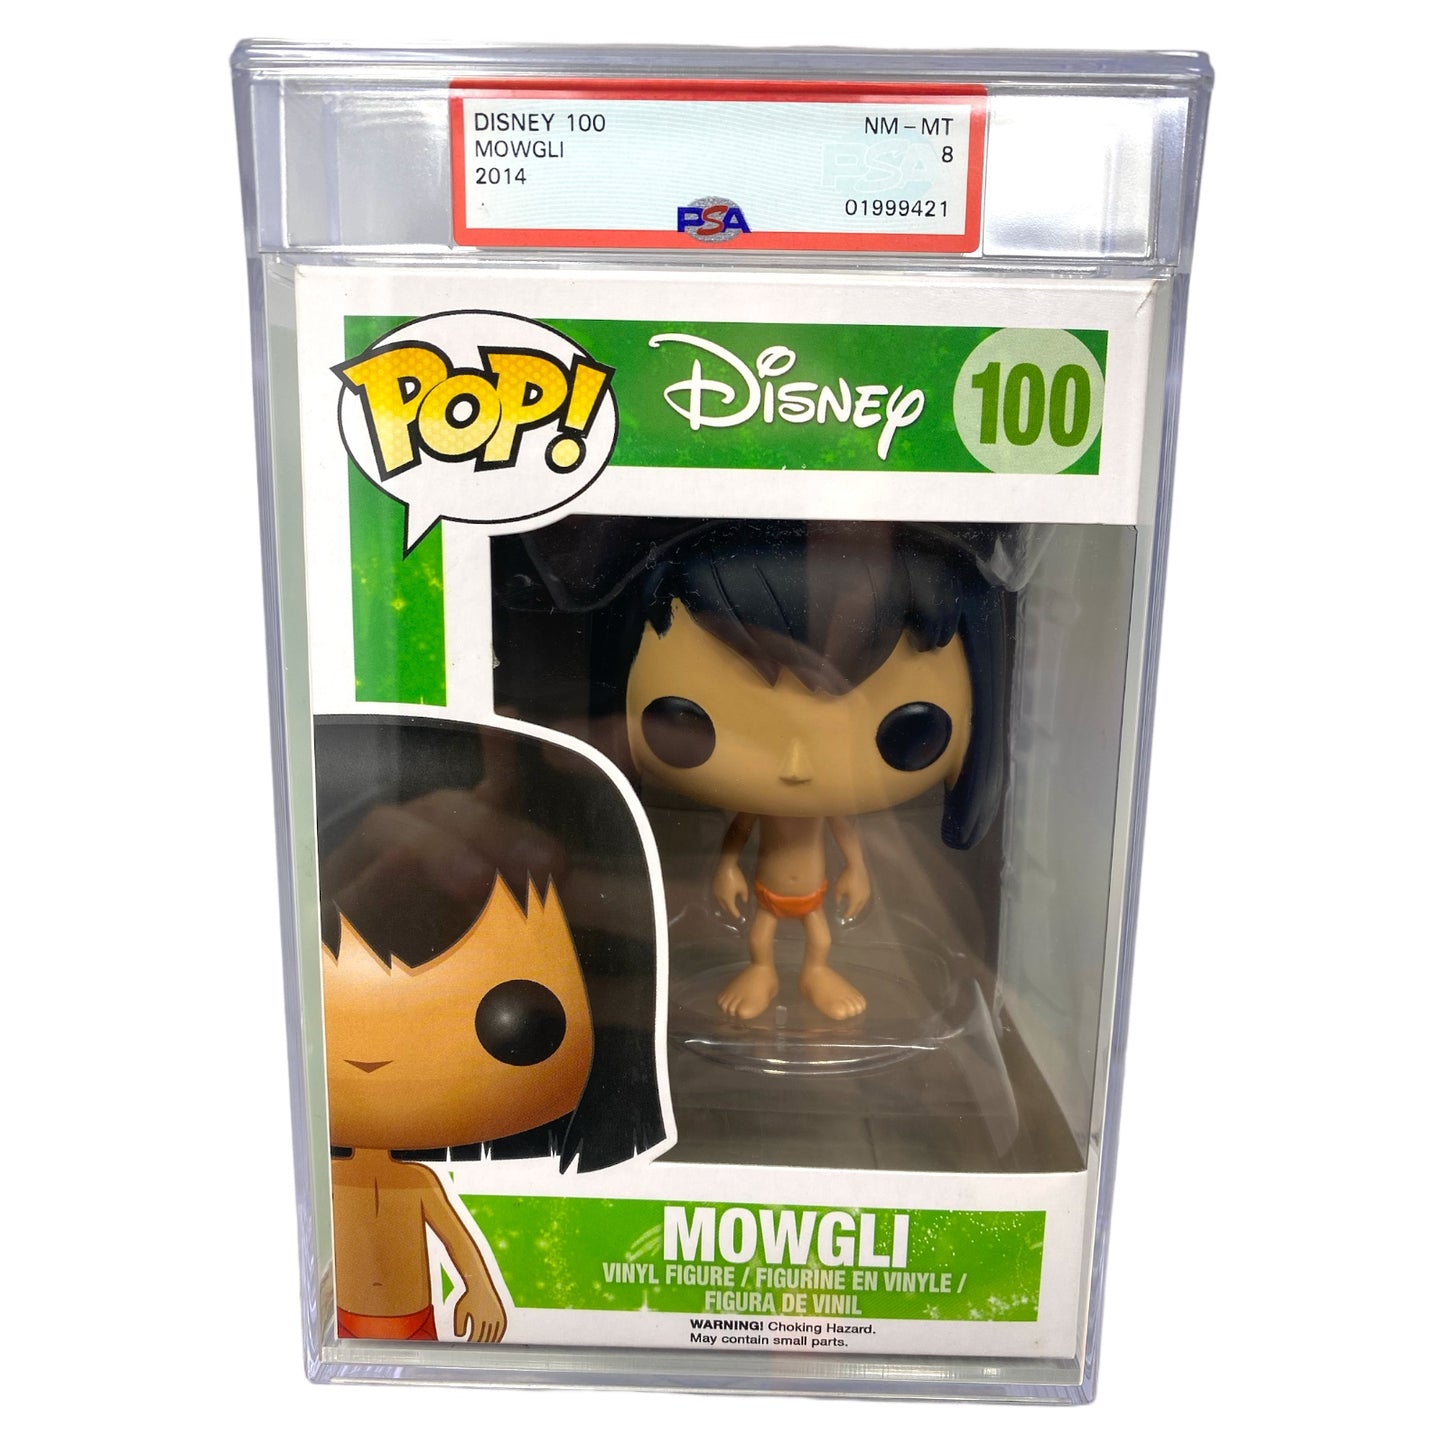 PSA Grade 8 2014 Mowgli 100